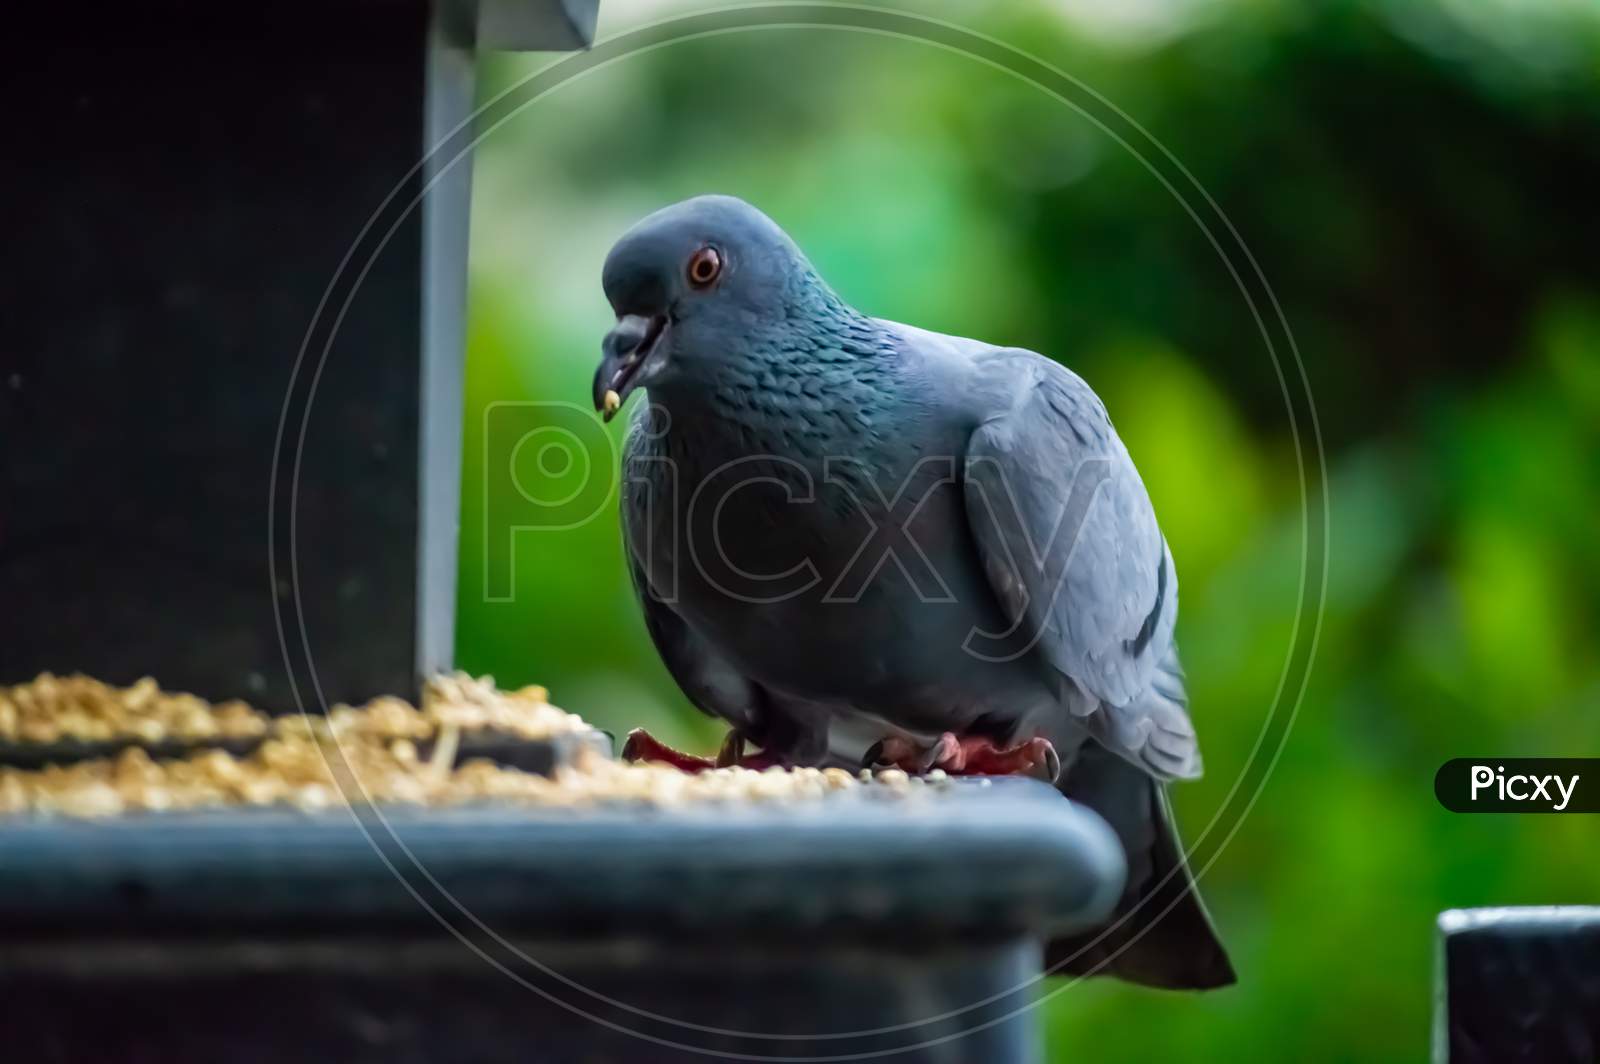 Indian pigeons eating